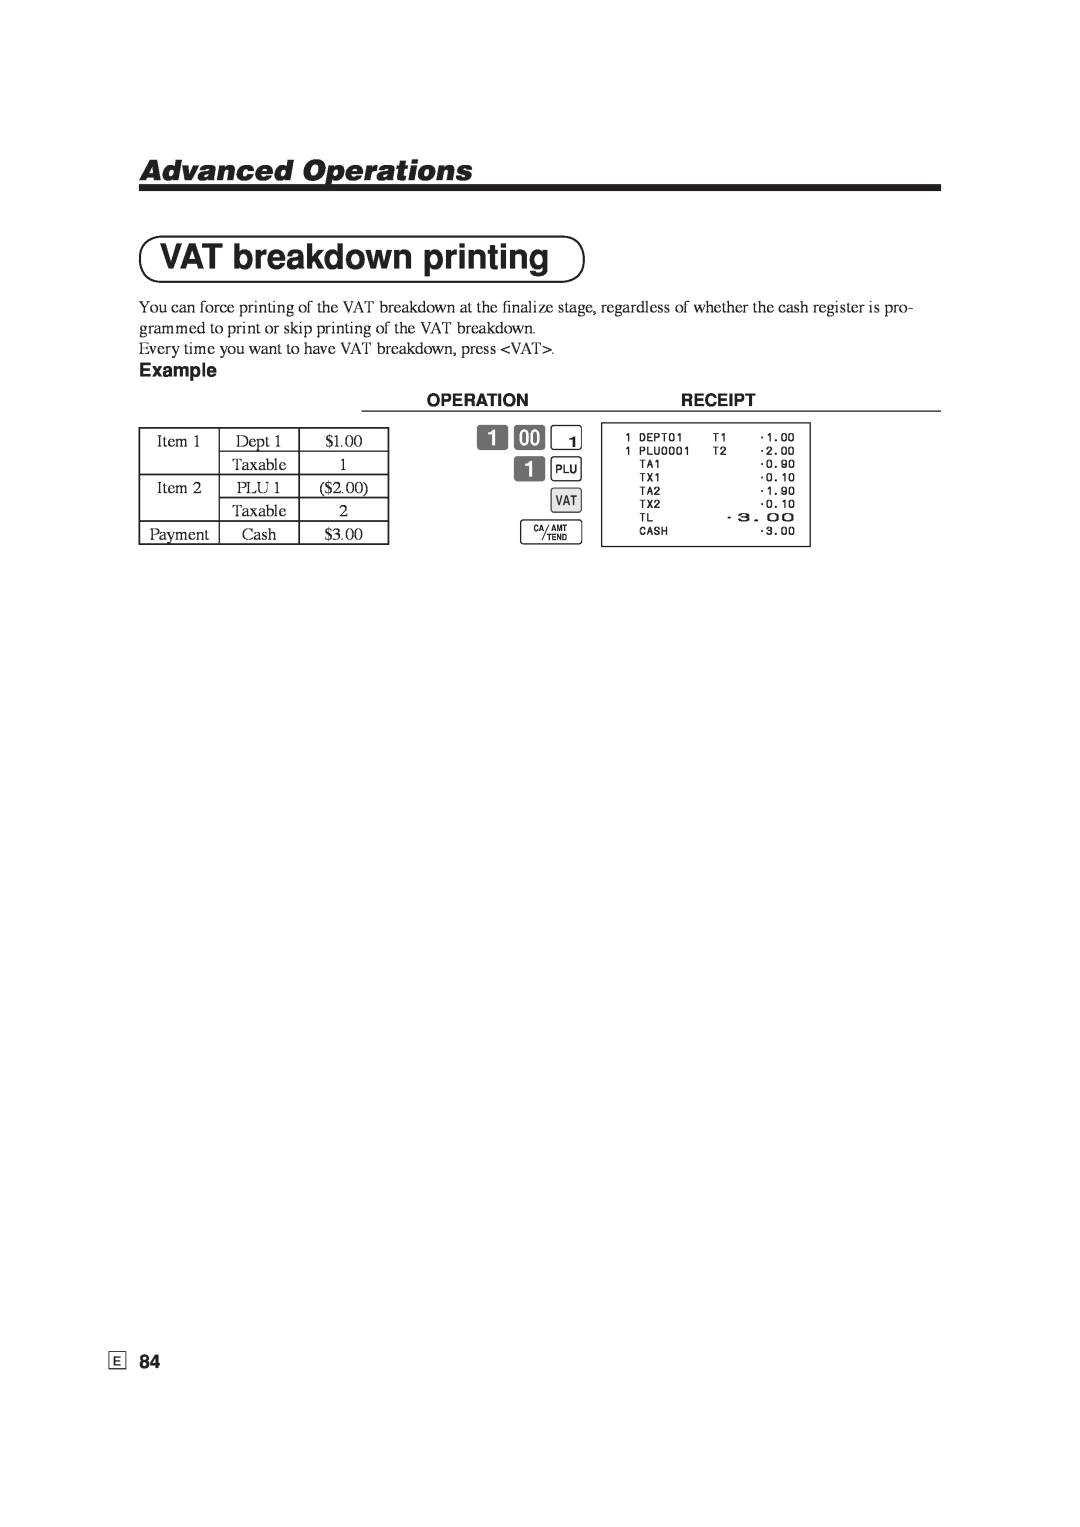 Casio SE-S6000, SE-C6000 user manual VAT breakdown printing, Advanced Operations, Example 